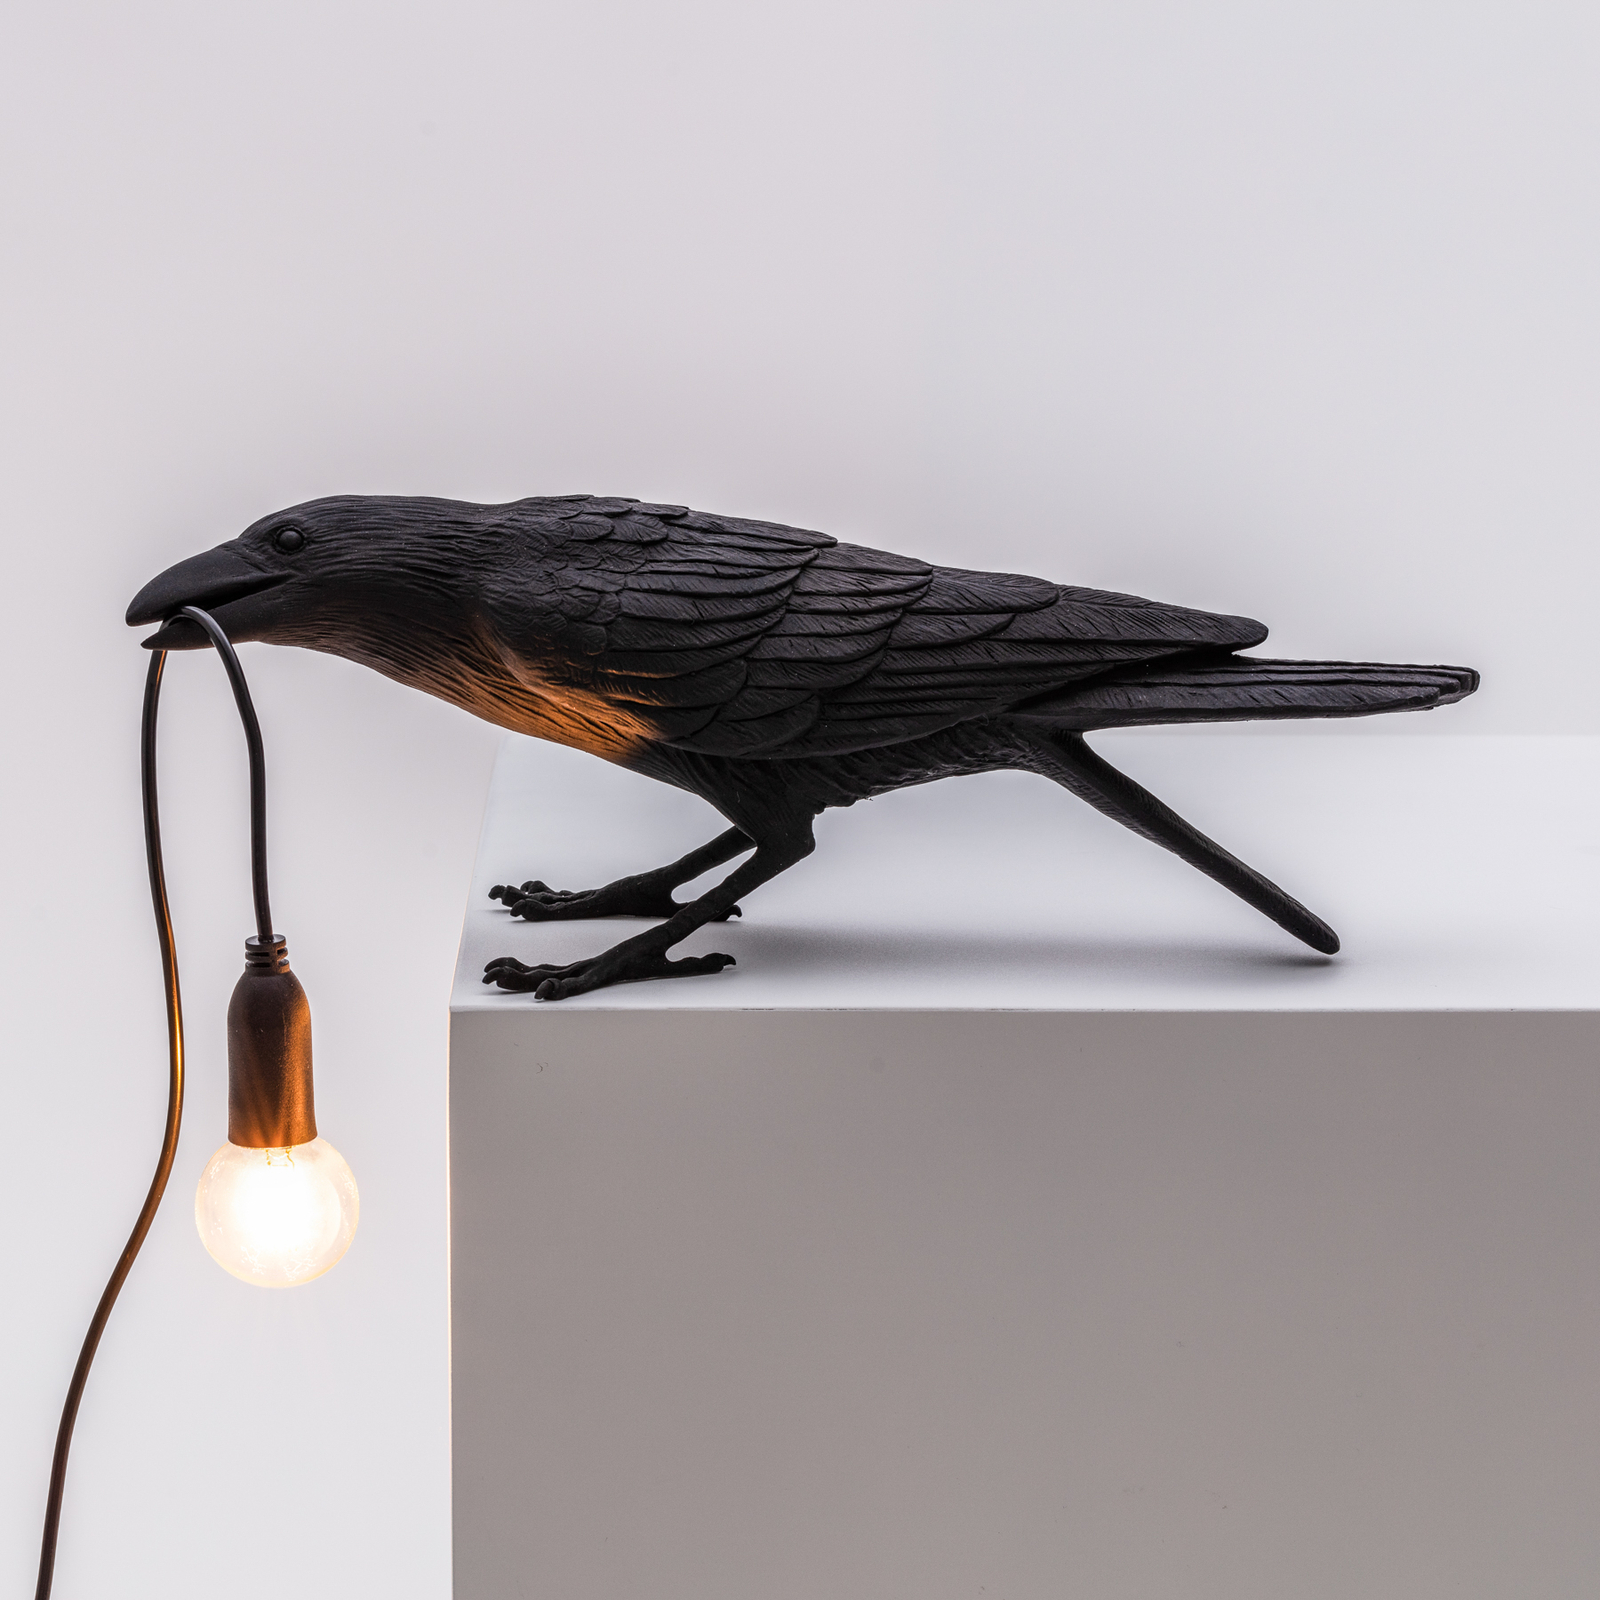 Lampa tarasowa LED Bird Lamp, grać, czarna